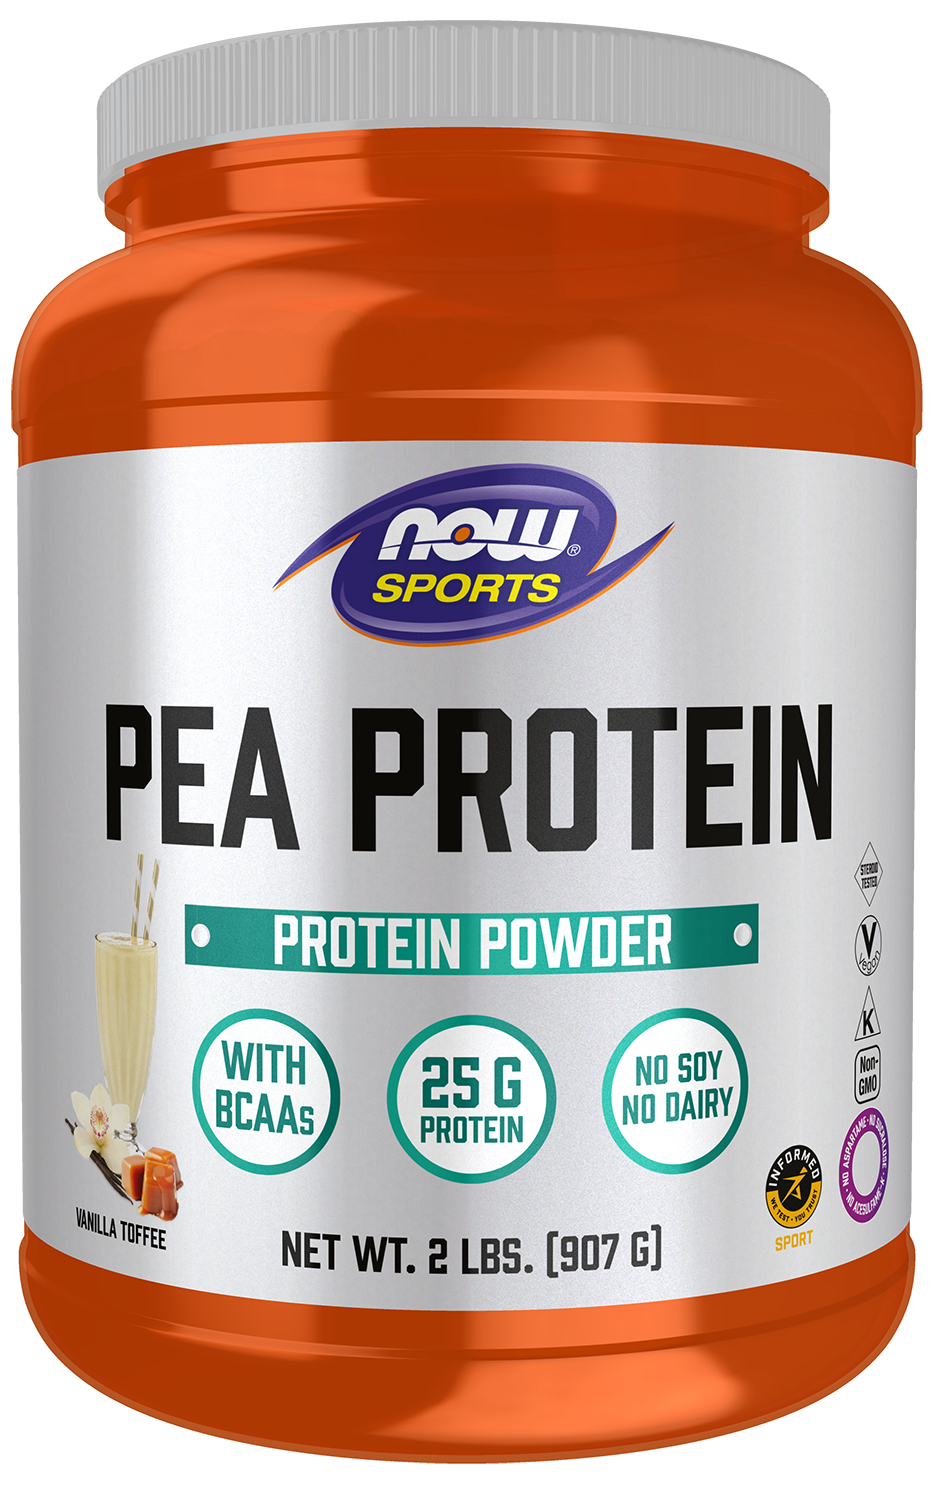 Pea Protein, Vanilla Toffee Powder - 2 lbs. Bottle Front